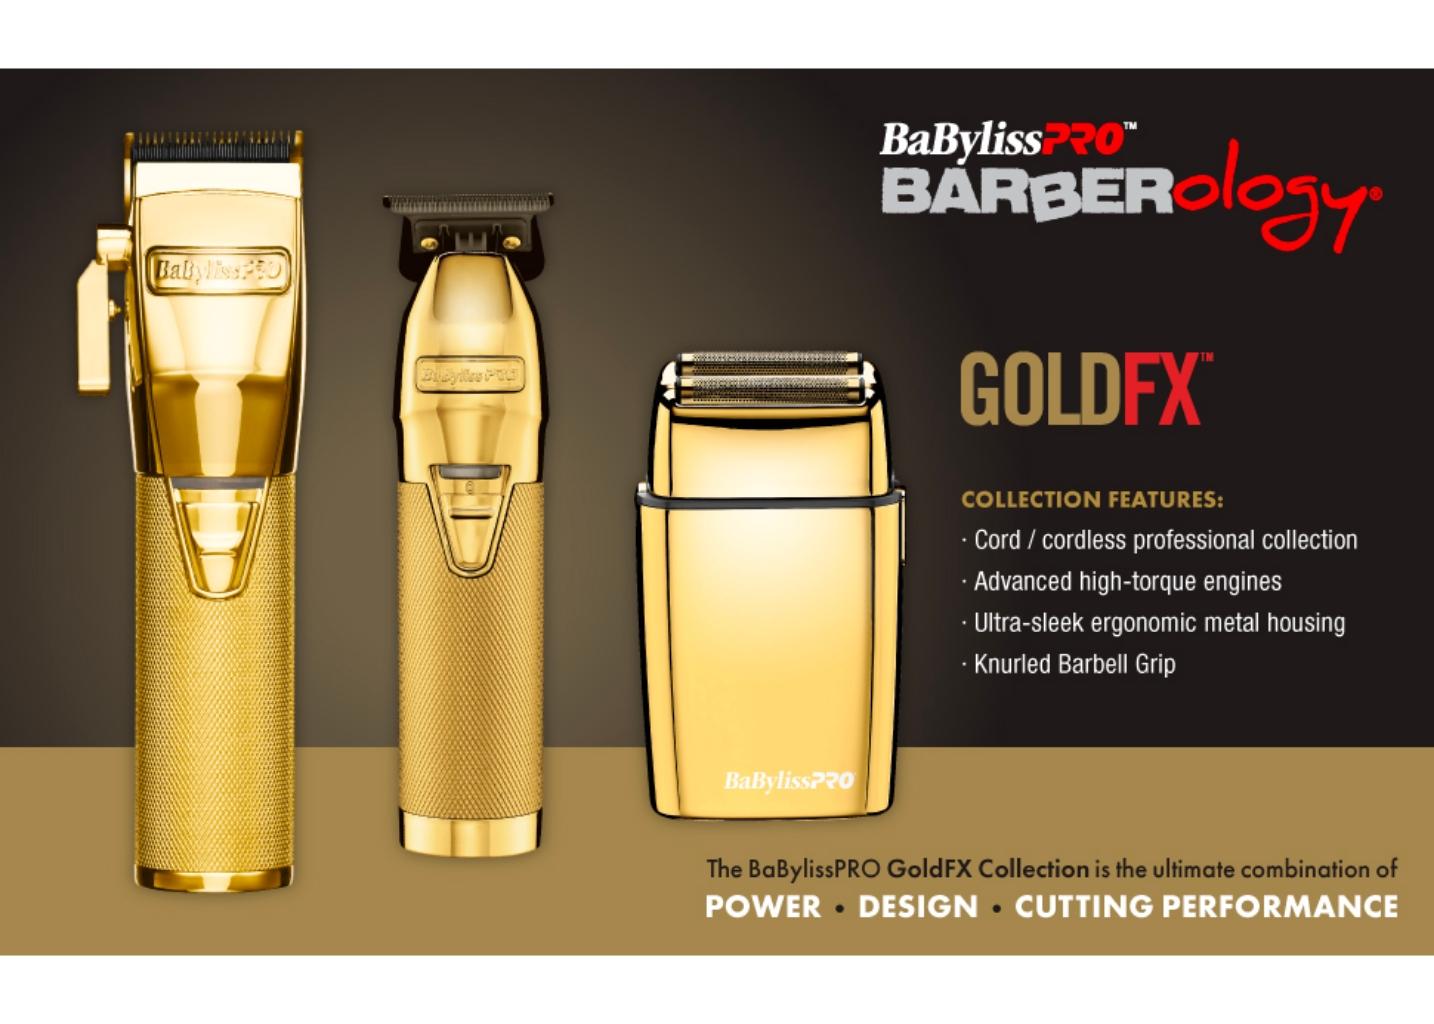 Babyliss Barberology Gold FX